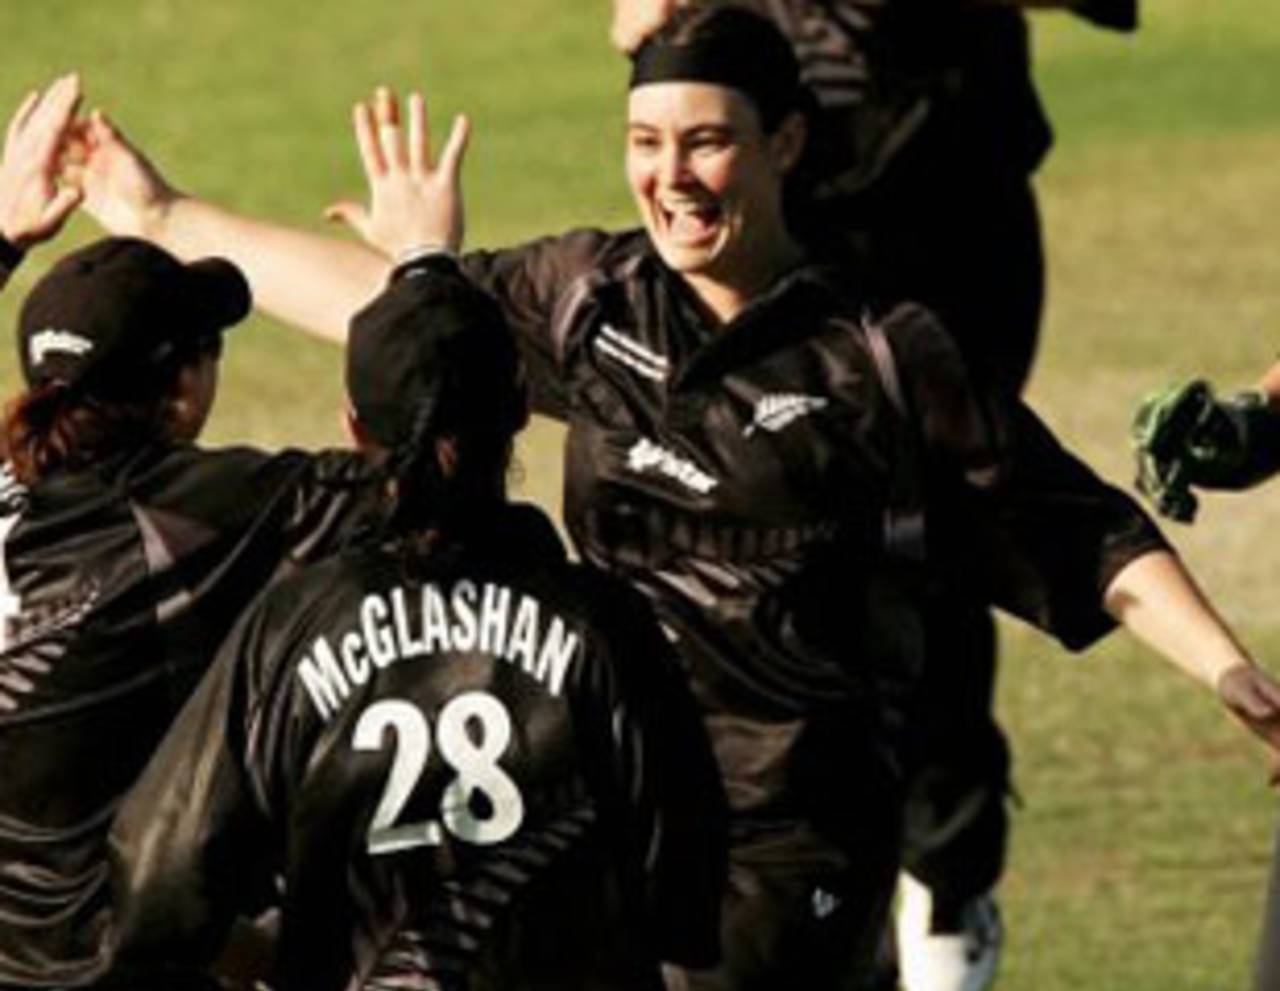 Sarah Tsukigawa is congratulated by her team-mates after picking up a wicket, Australia women v New Zealand women, 2nd ODI, Darwin, July 22, 2007